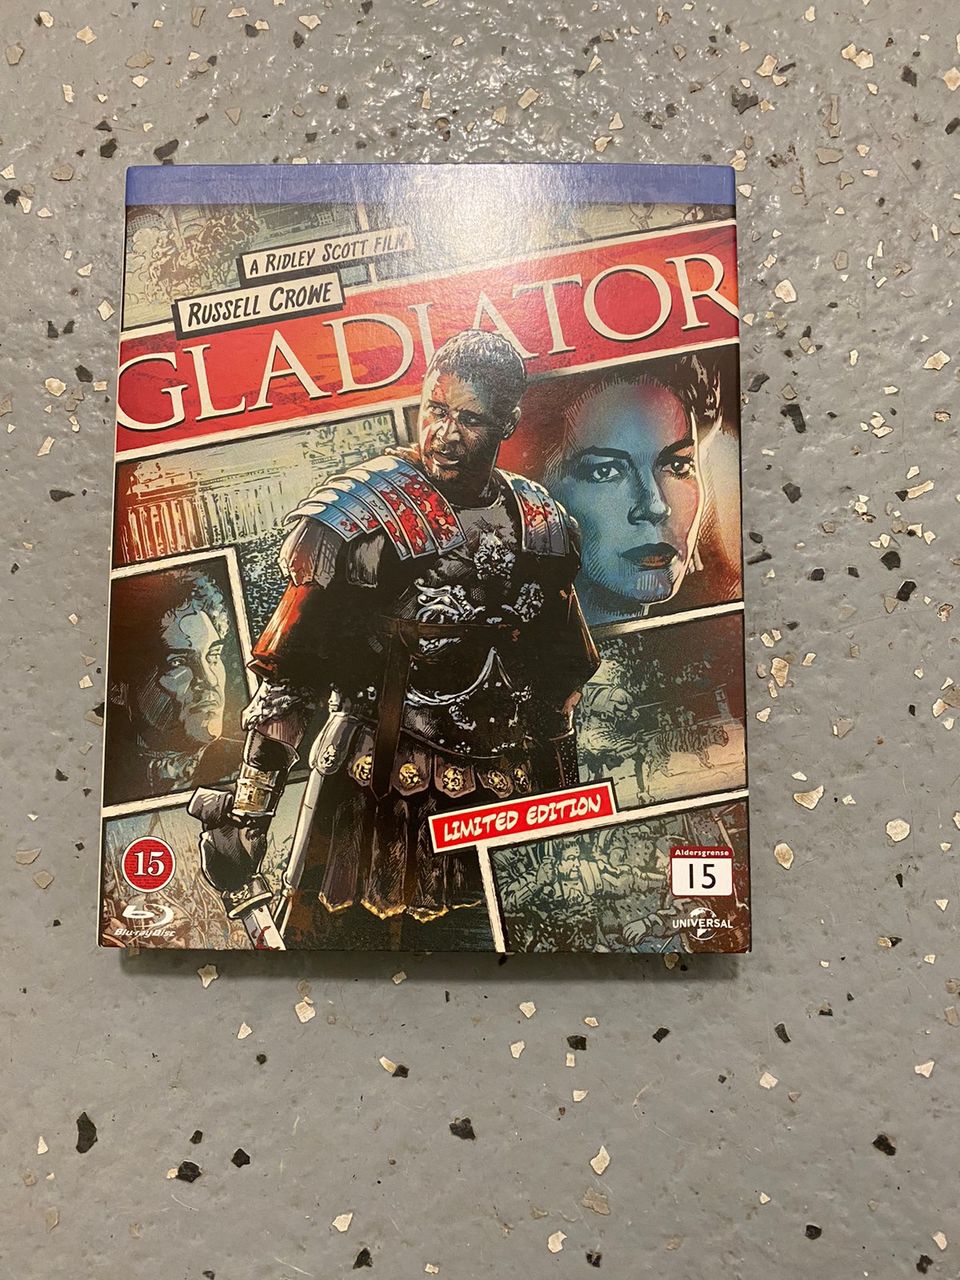 Gladiator Limited edition blu ray